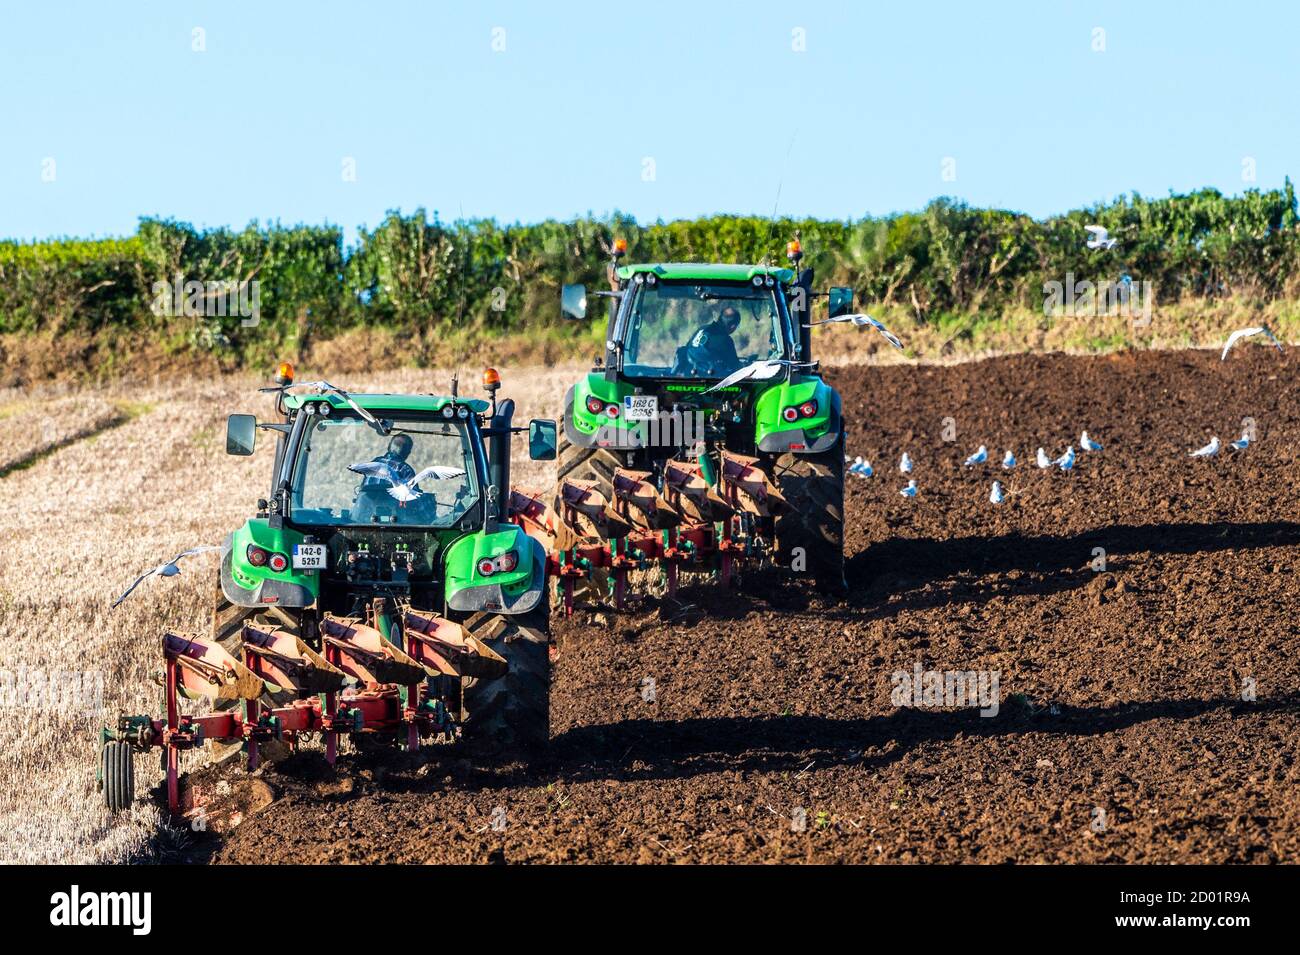 Deutz fahr tractors hi-res stock photography and images - Alamy